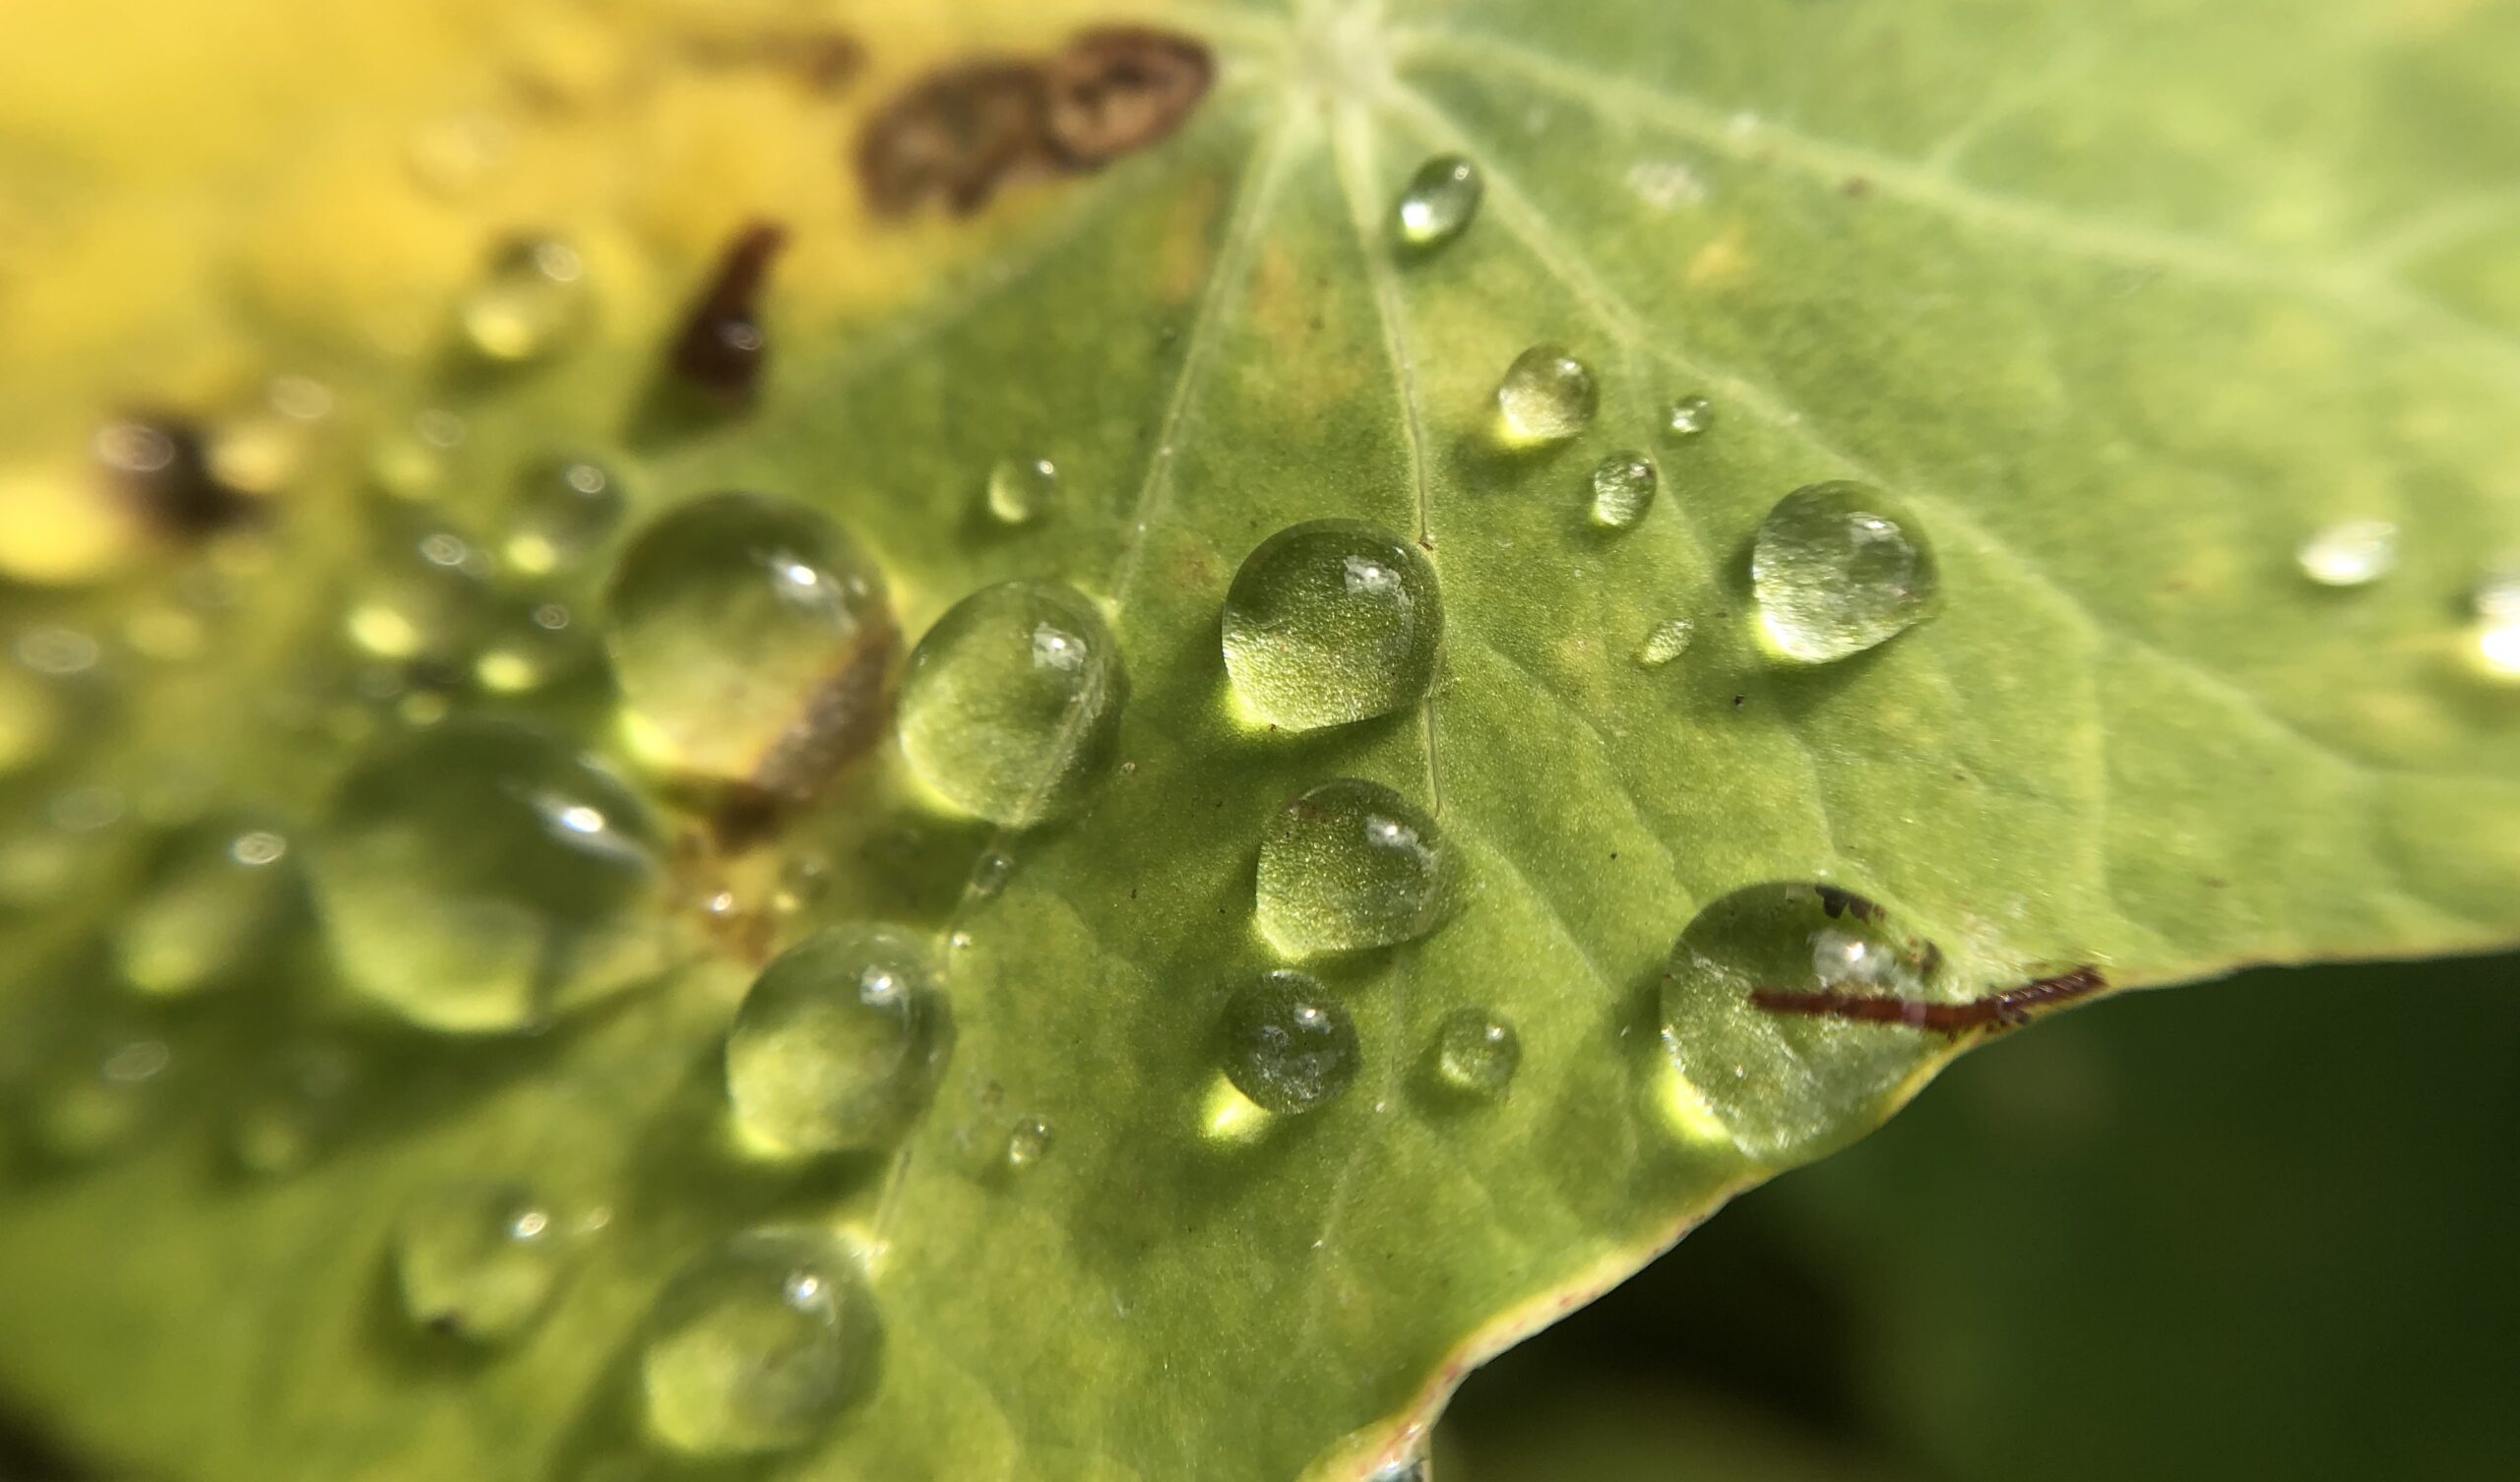 Dew drops on nasturtium leaves